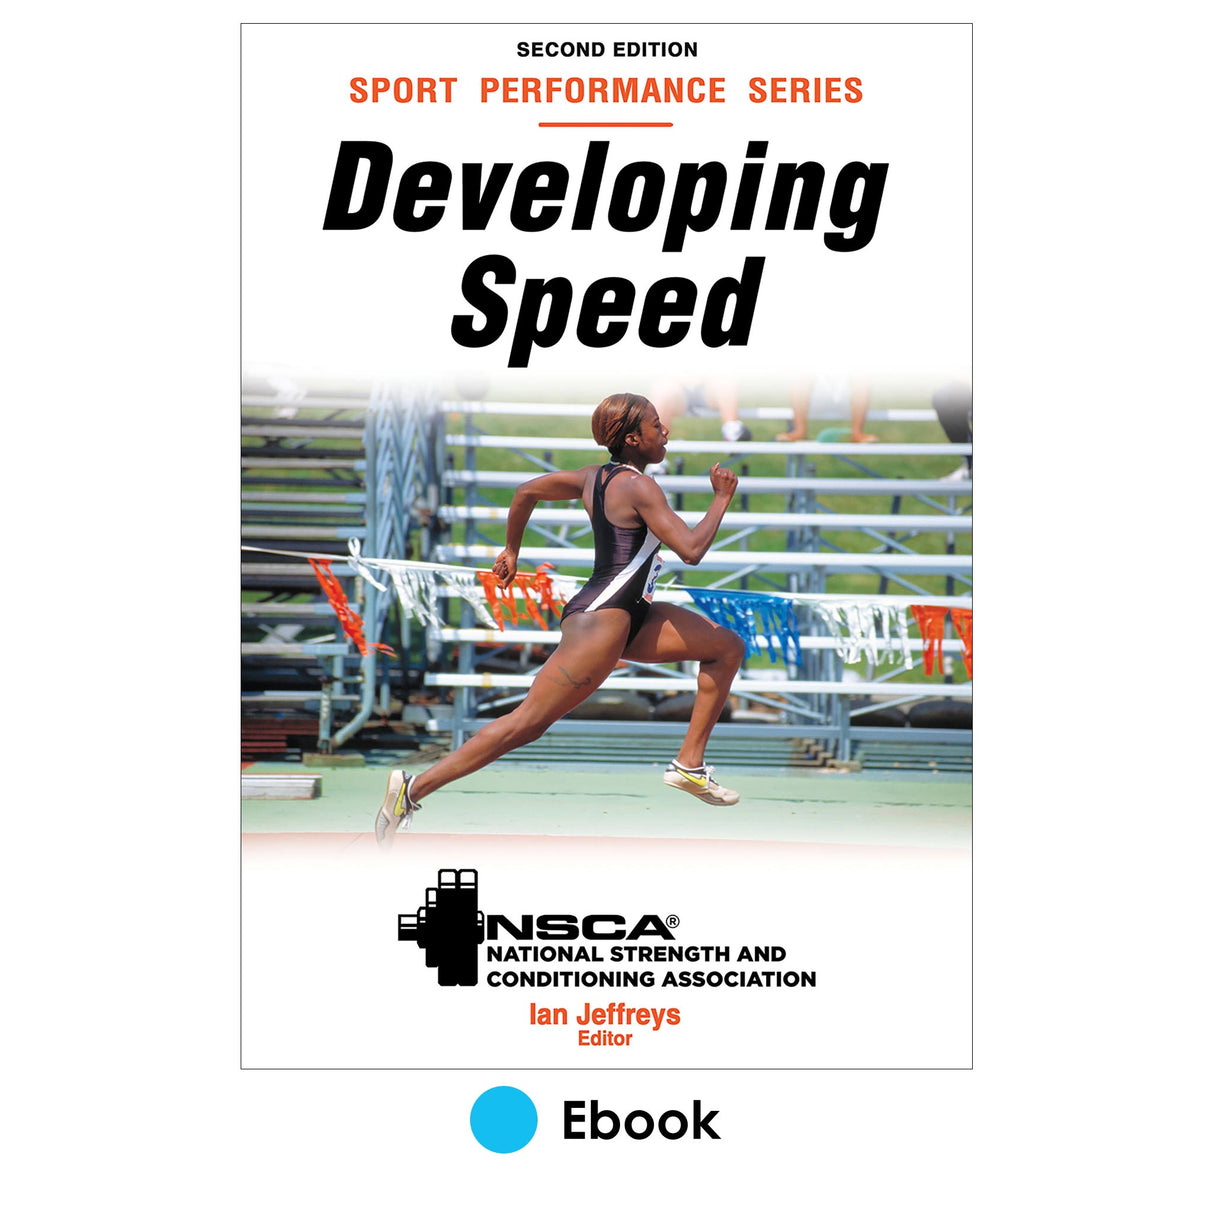 Developing Speed 2nd Edition epub